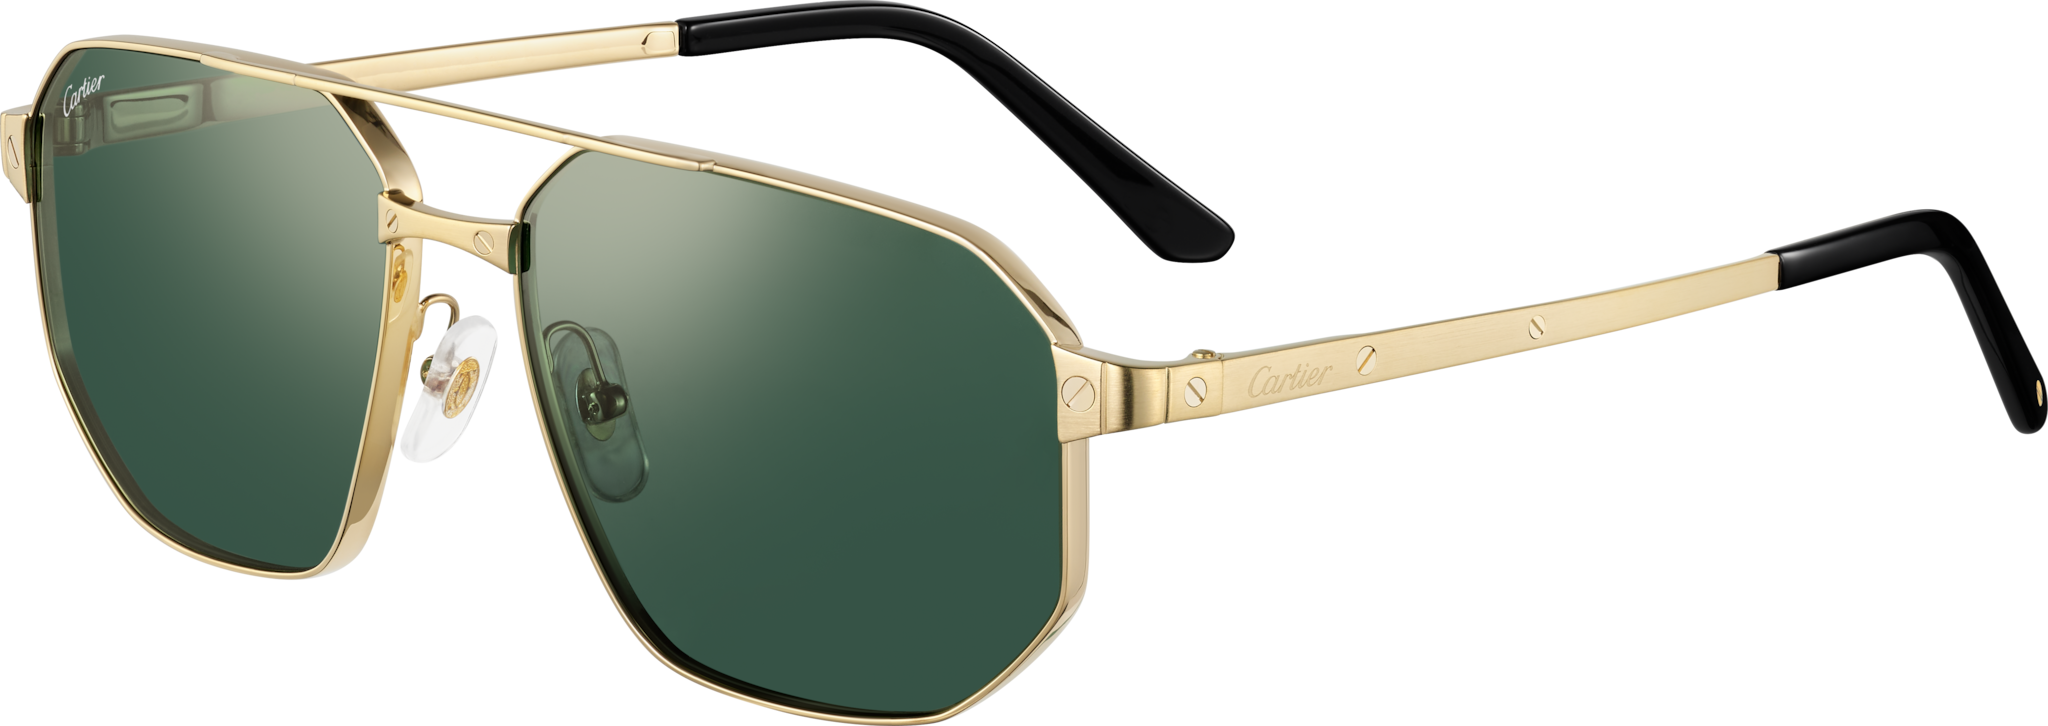 Santos de Cartier SunglassesSmooth and brushed golden-finish metal, green lenses